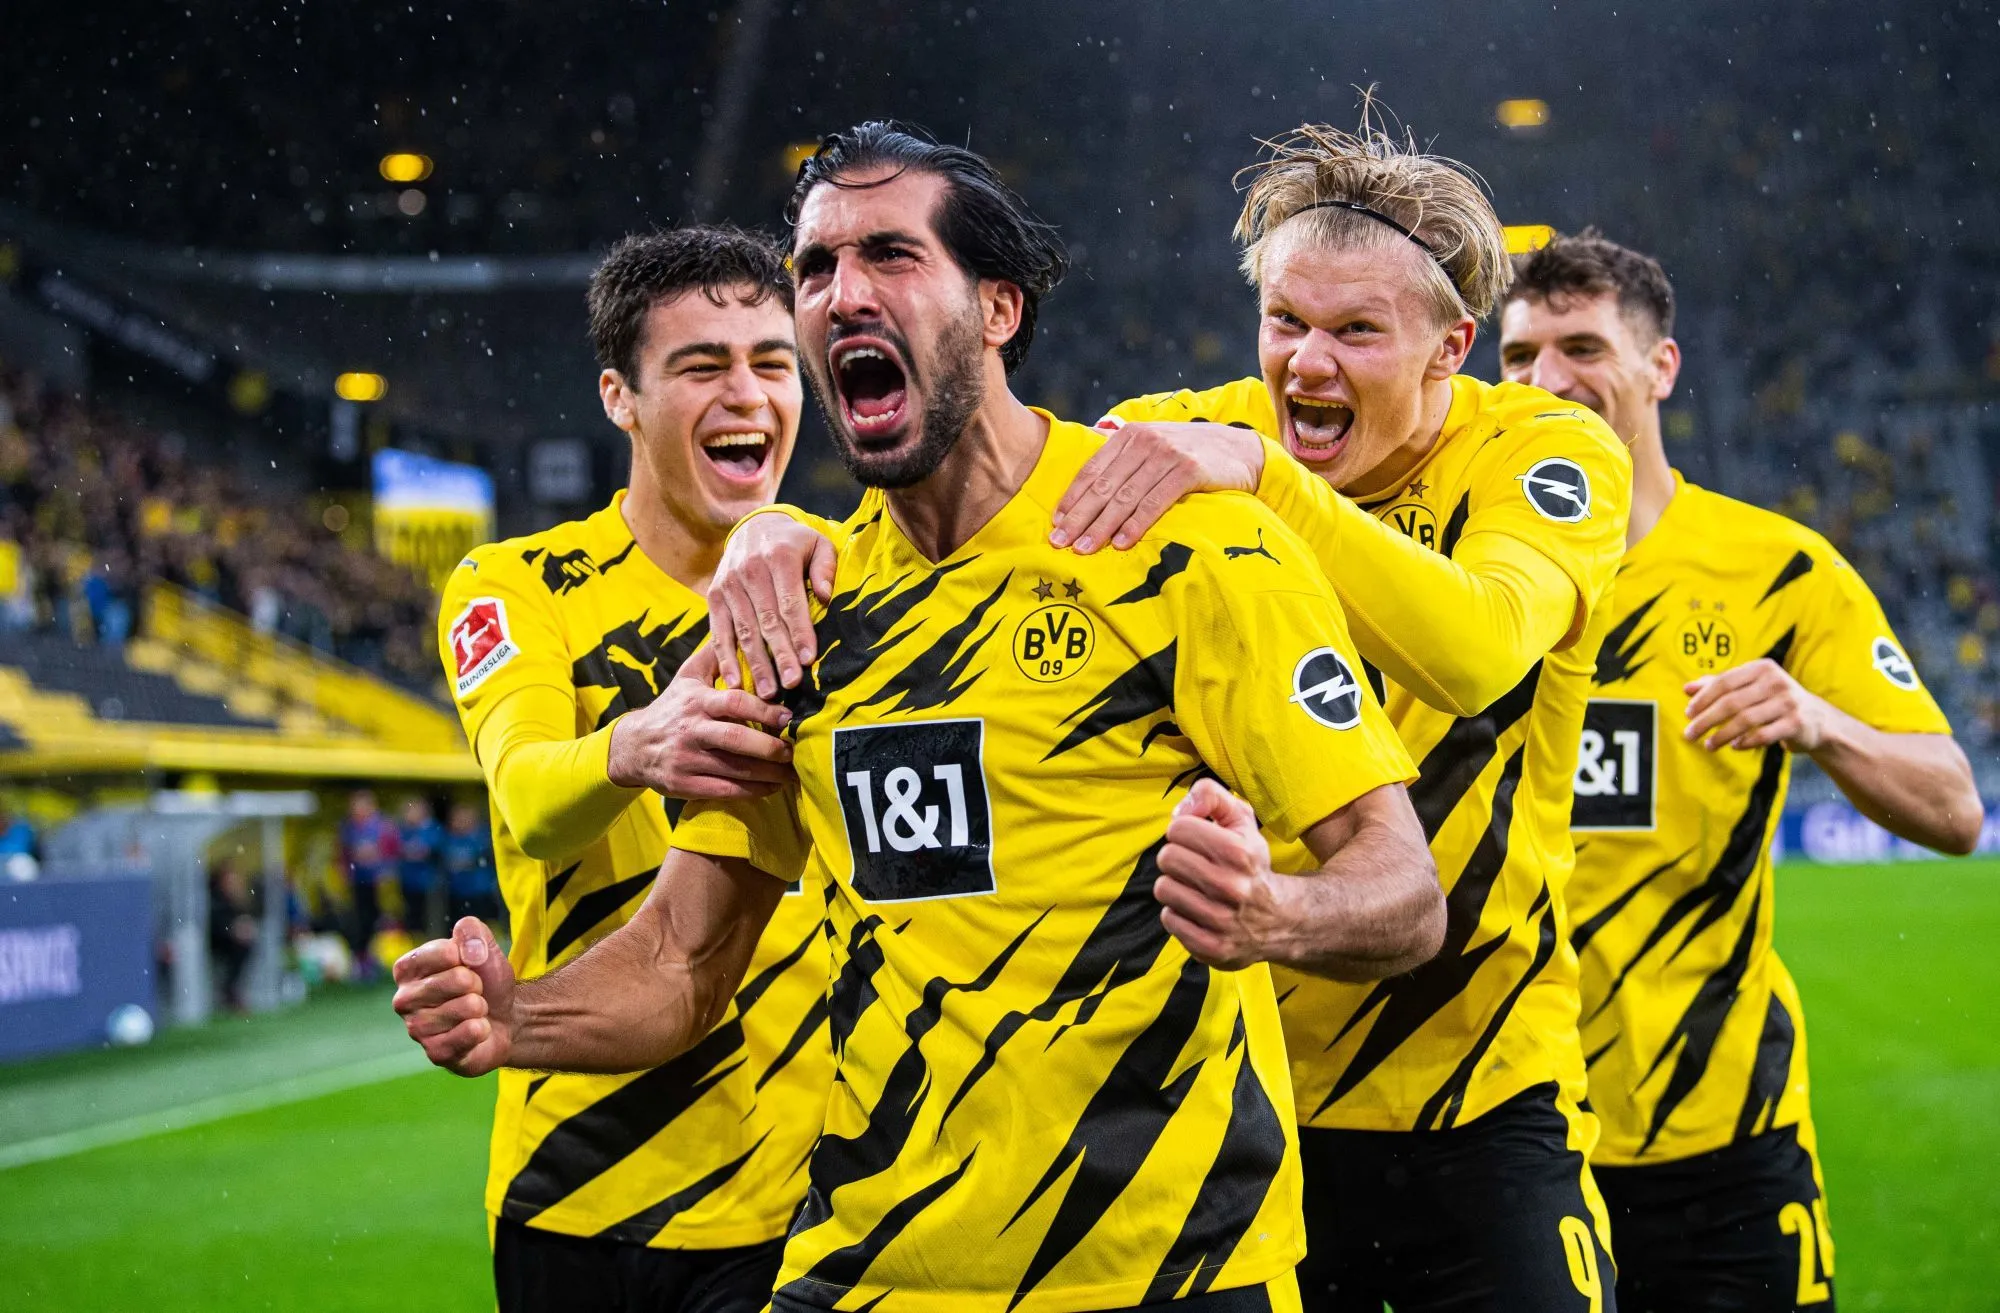 Pronostic Borussia Dortmund Eintracht Francfort : Analyse, cotes et prono du match de Bundesliga